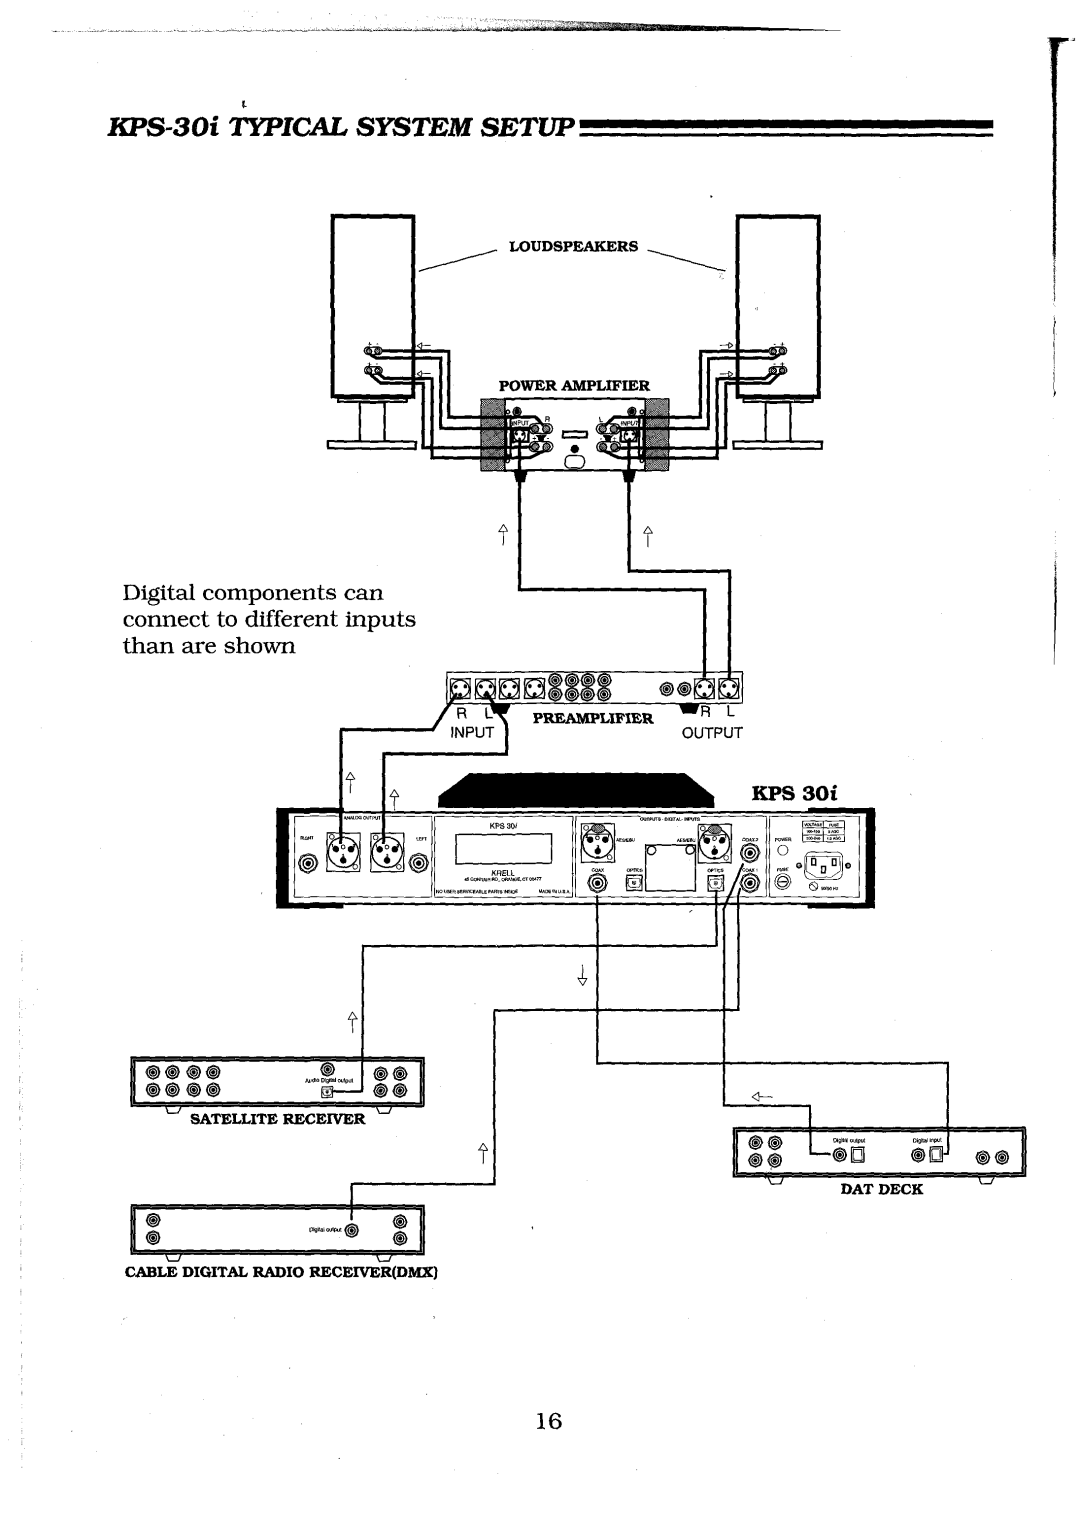 Krell Industries manual KPS-30iTYPICAL SYSTEM SETUP, Loudspeakers Poweramplifier, Preamplifier, Output 